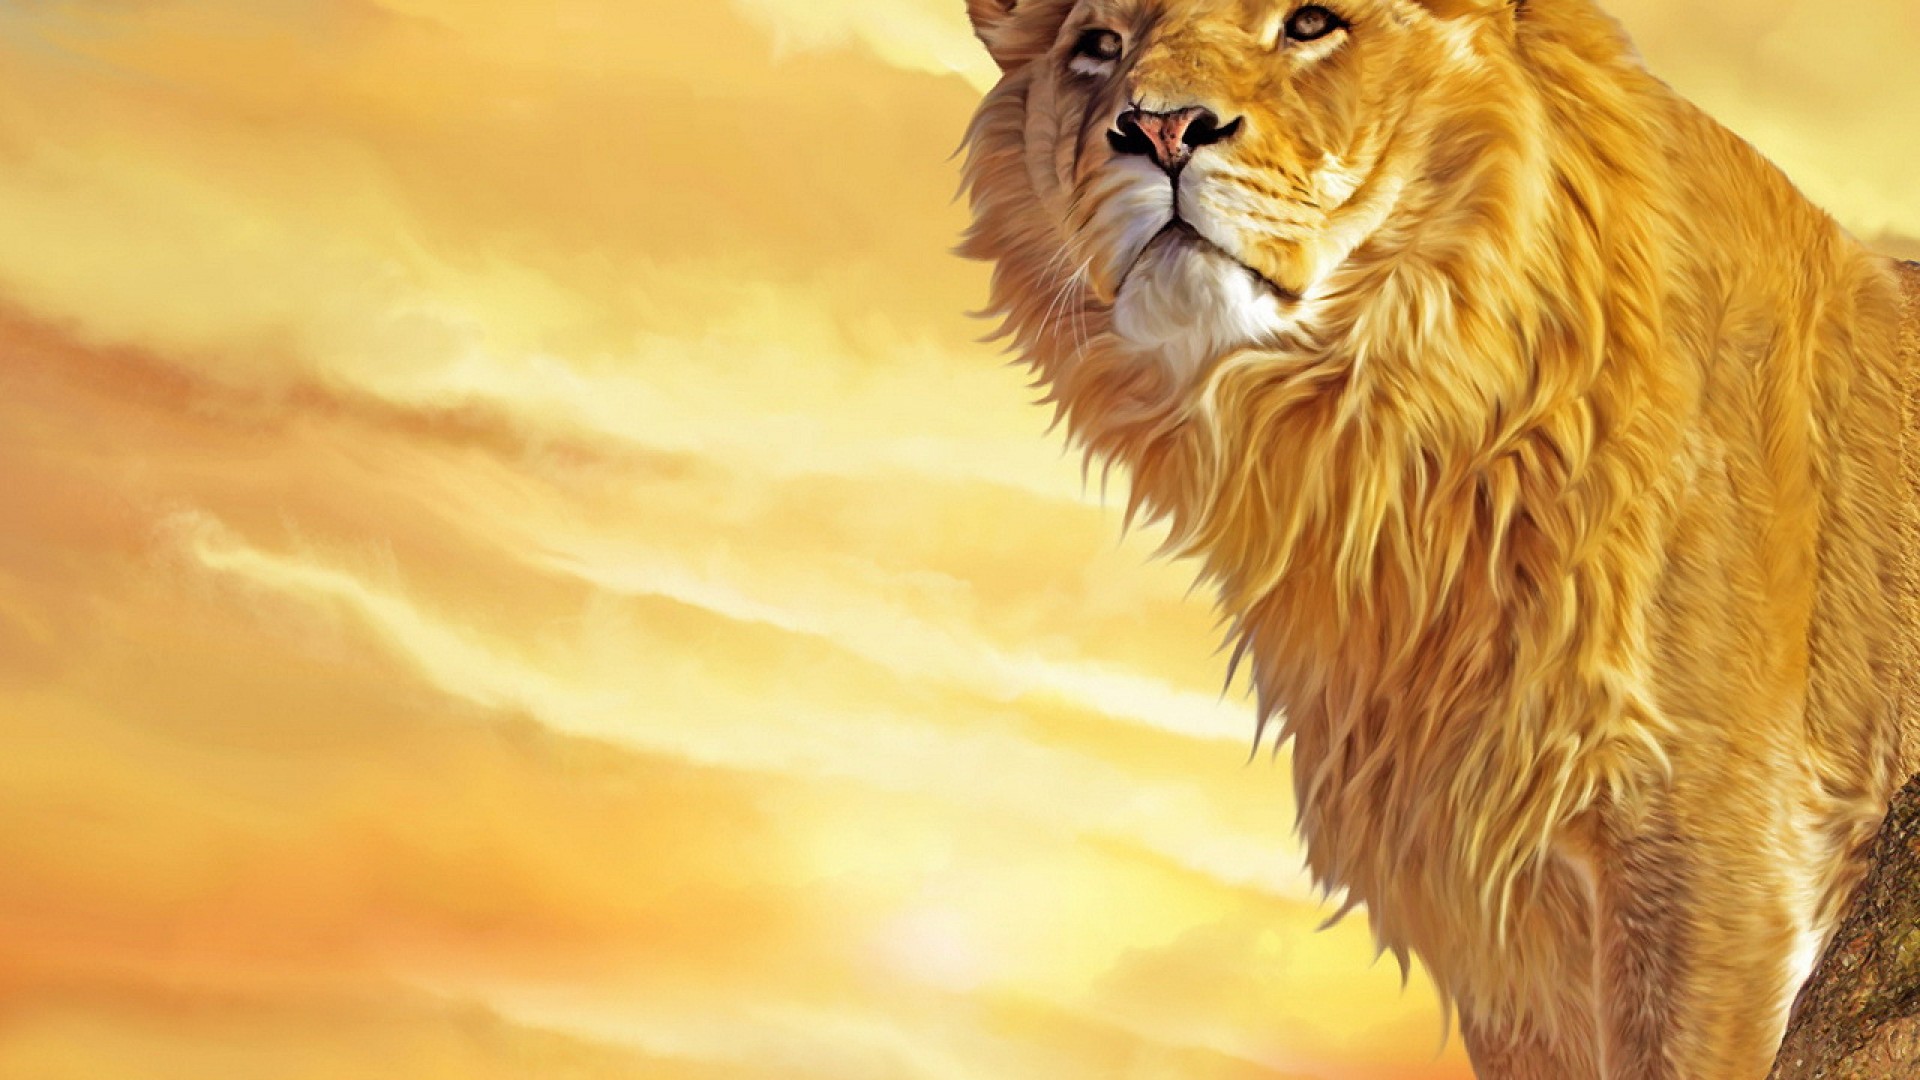 Lion tiger wallpaper dowload 3d hd pictures.